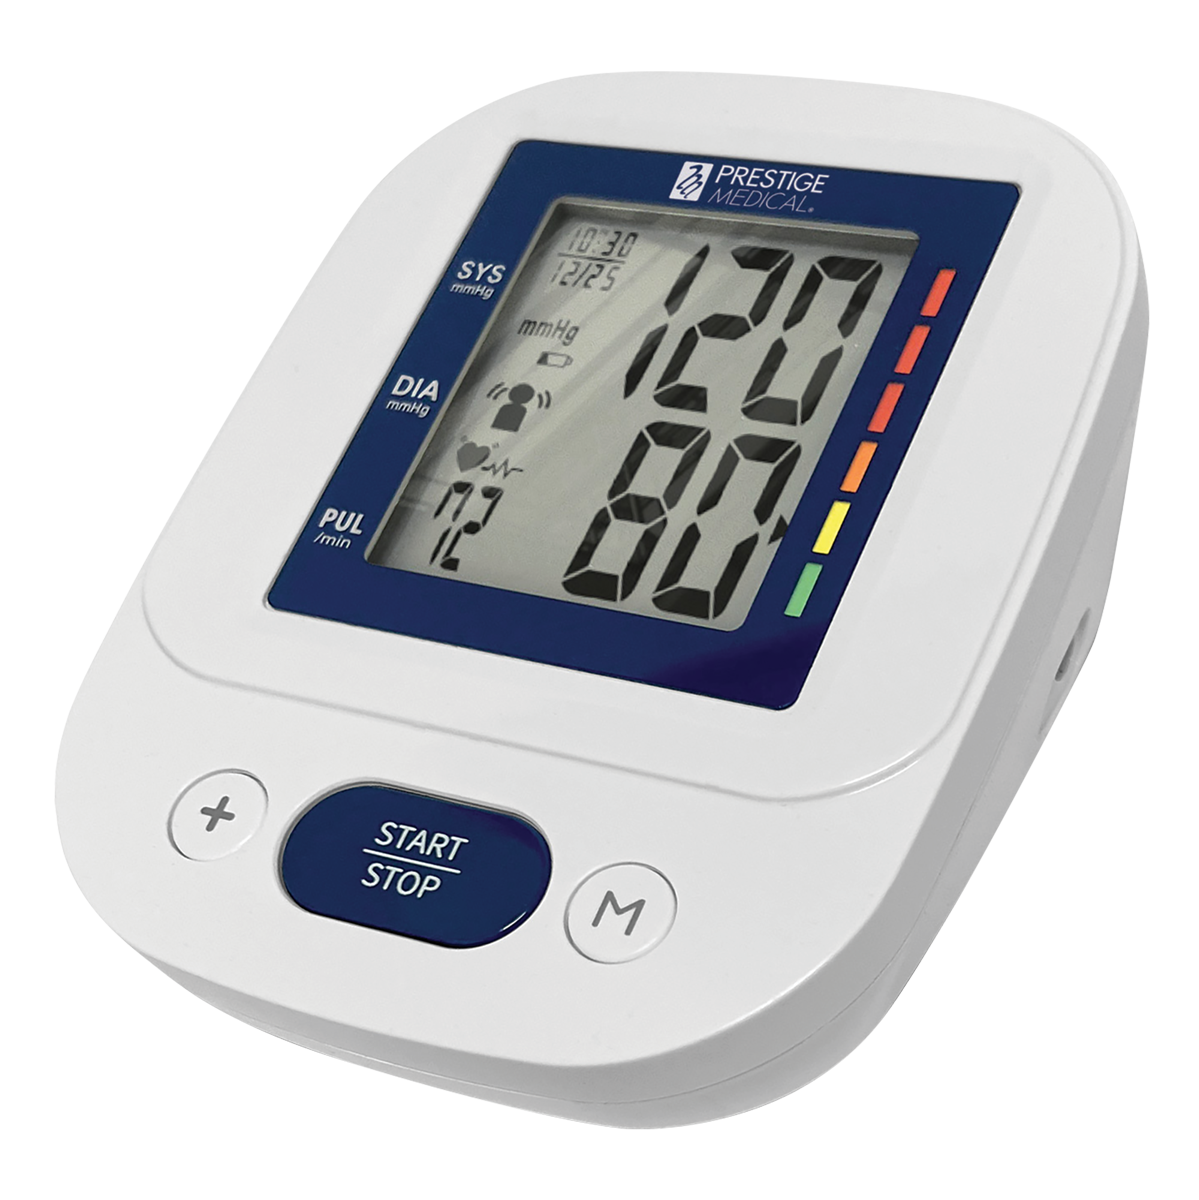 Healthmate Deluxe Adult Blood Pressure Monitor